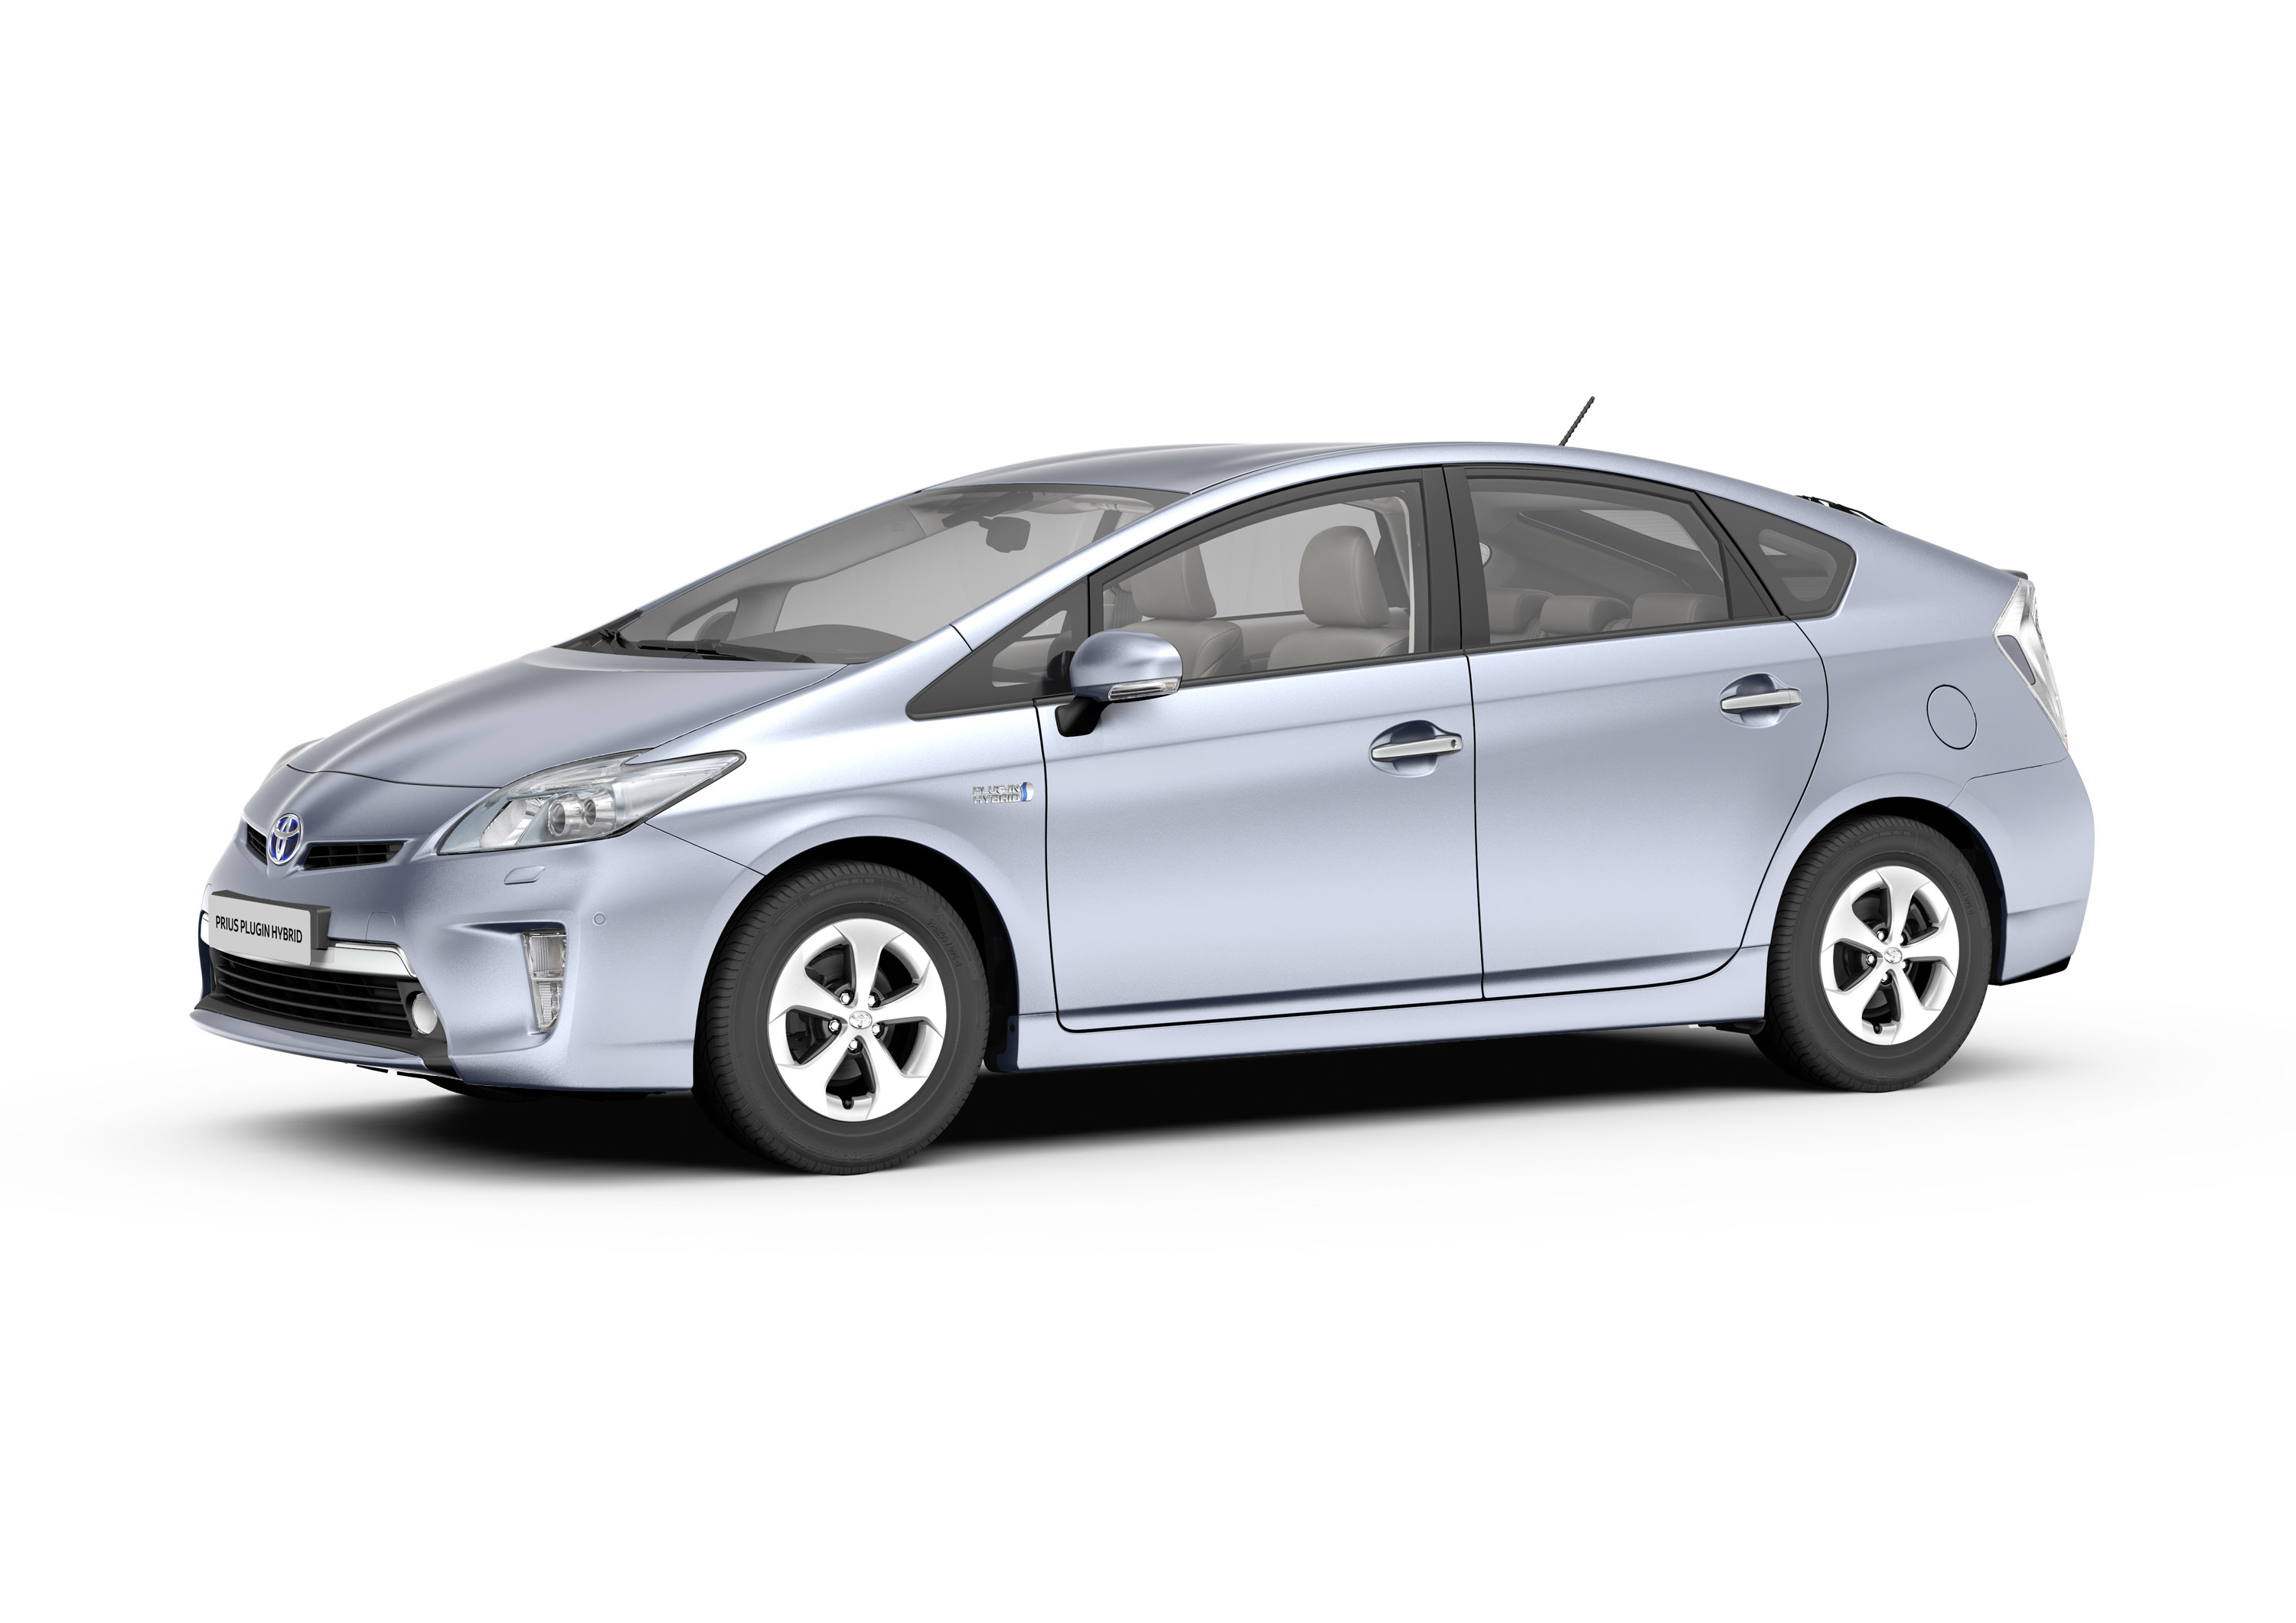 Toyota Prius Plug-in Hybrid Electric Vehicle - PHEV